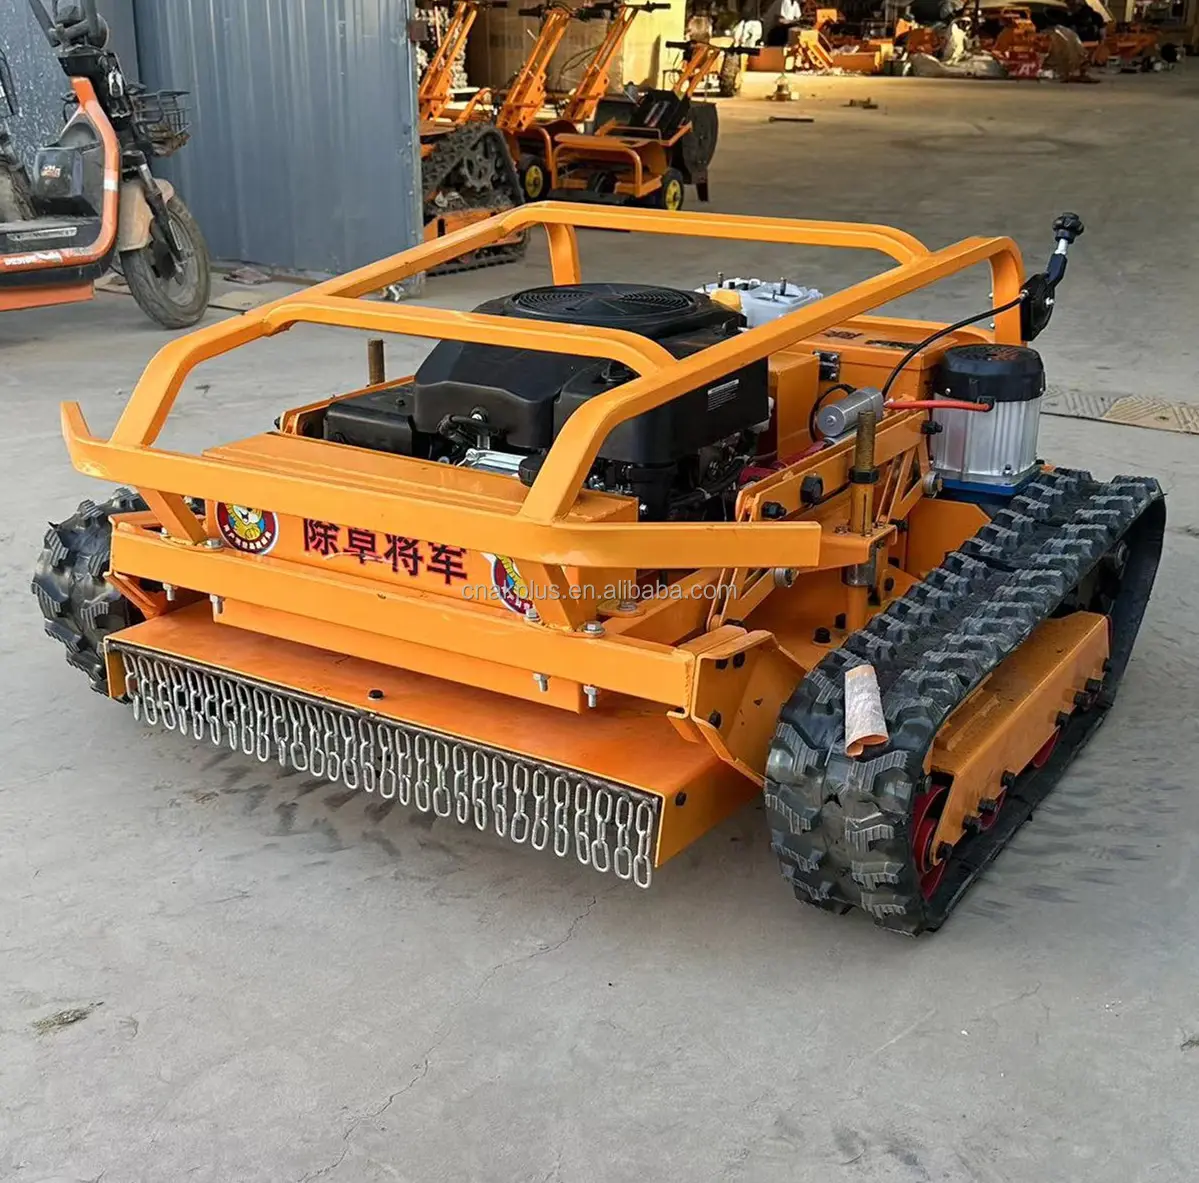 Mesin pemotong rumput Robot Remote Control, Multi guna Rc mesin pemotong rumput untuk petani